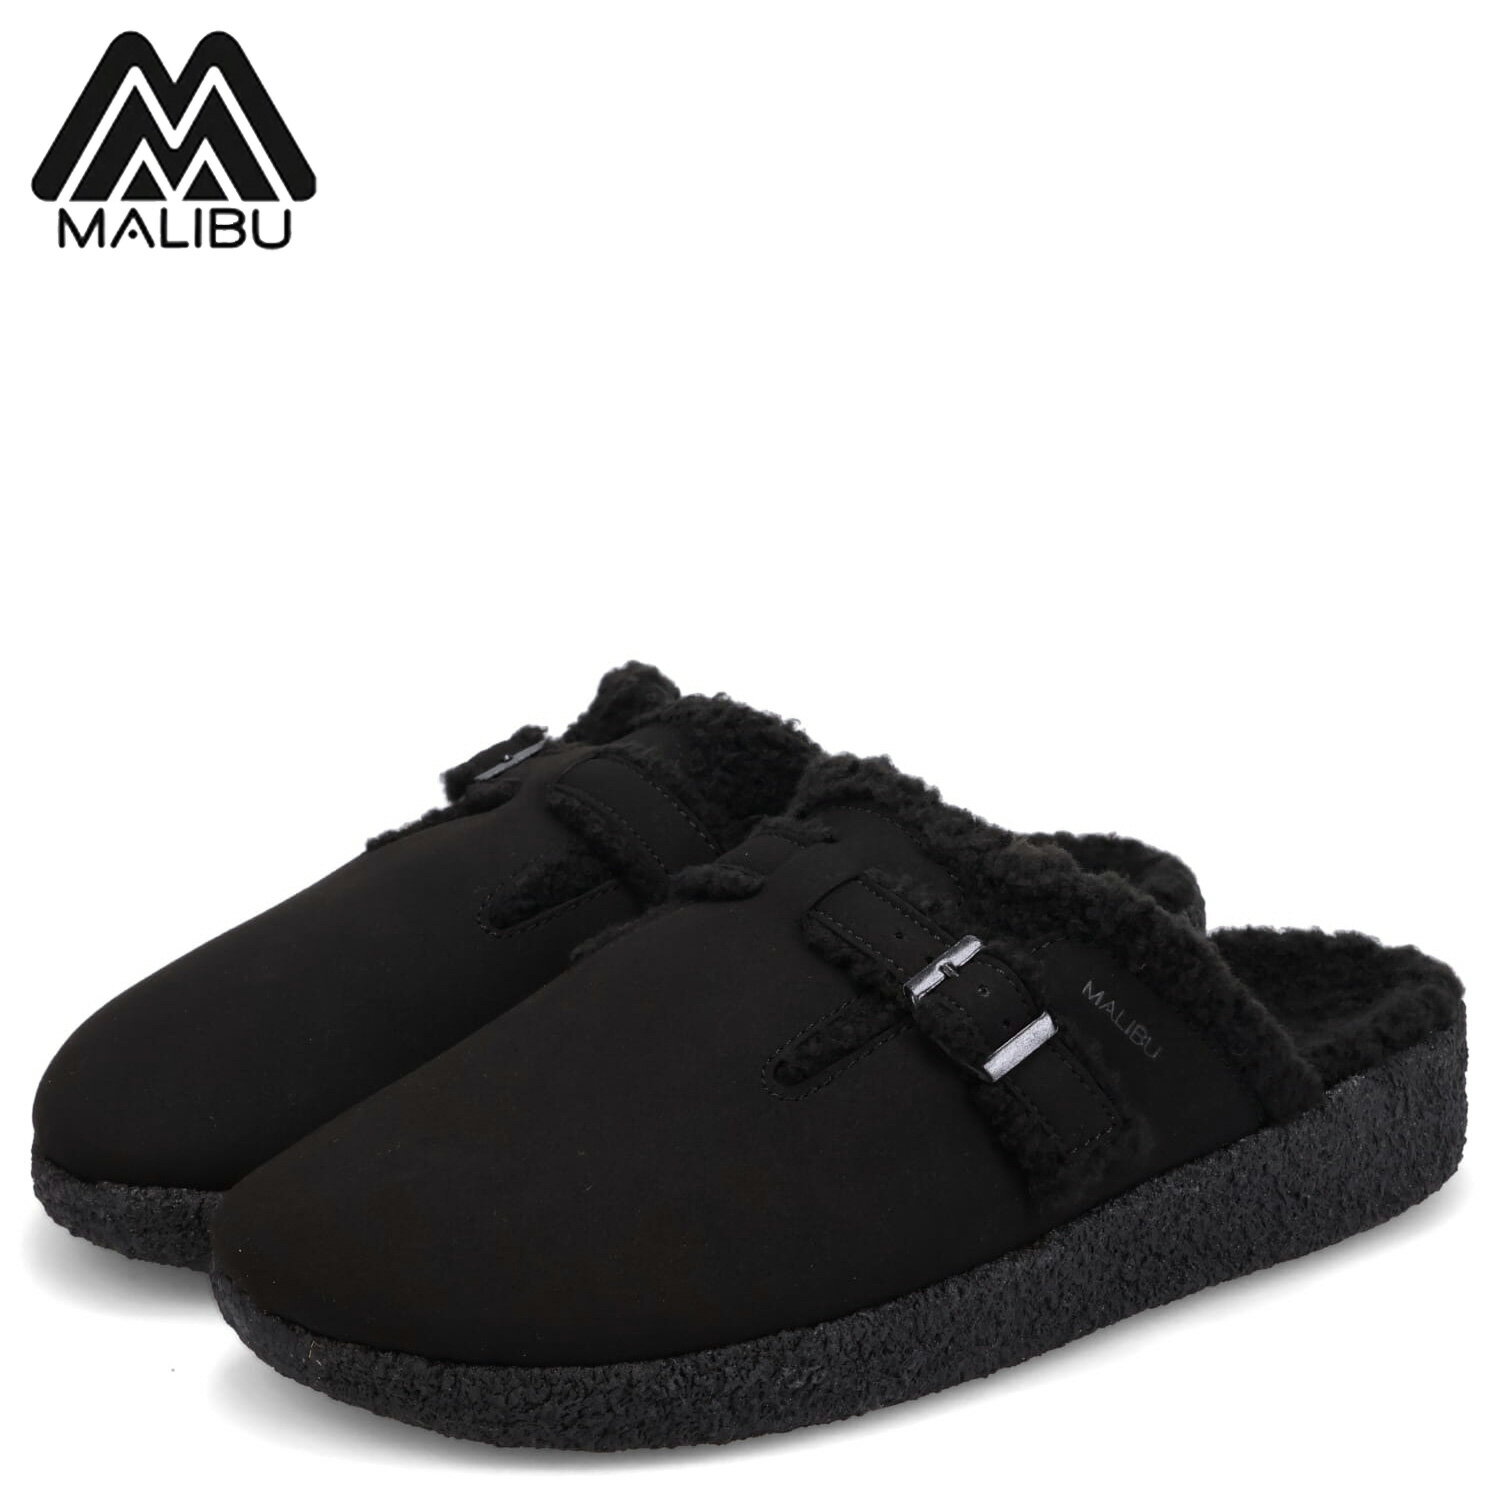 MALIBU SANDALS マリブサンダルズ サンダル クロッグサンダル フローレス ミュール メンズ FLORES MULE ブラック 黒 MS20-0001